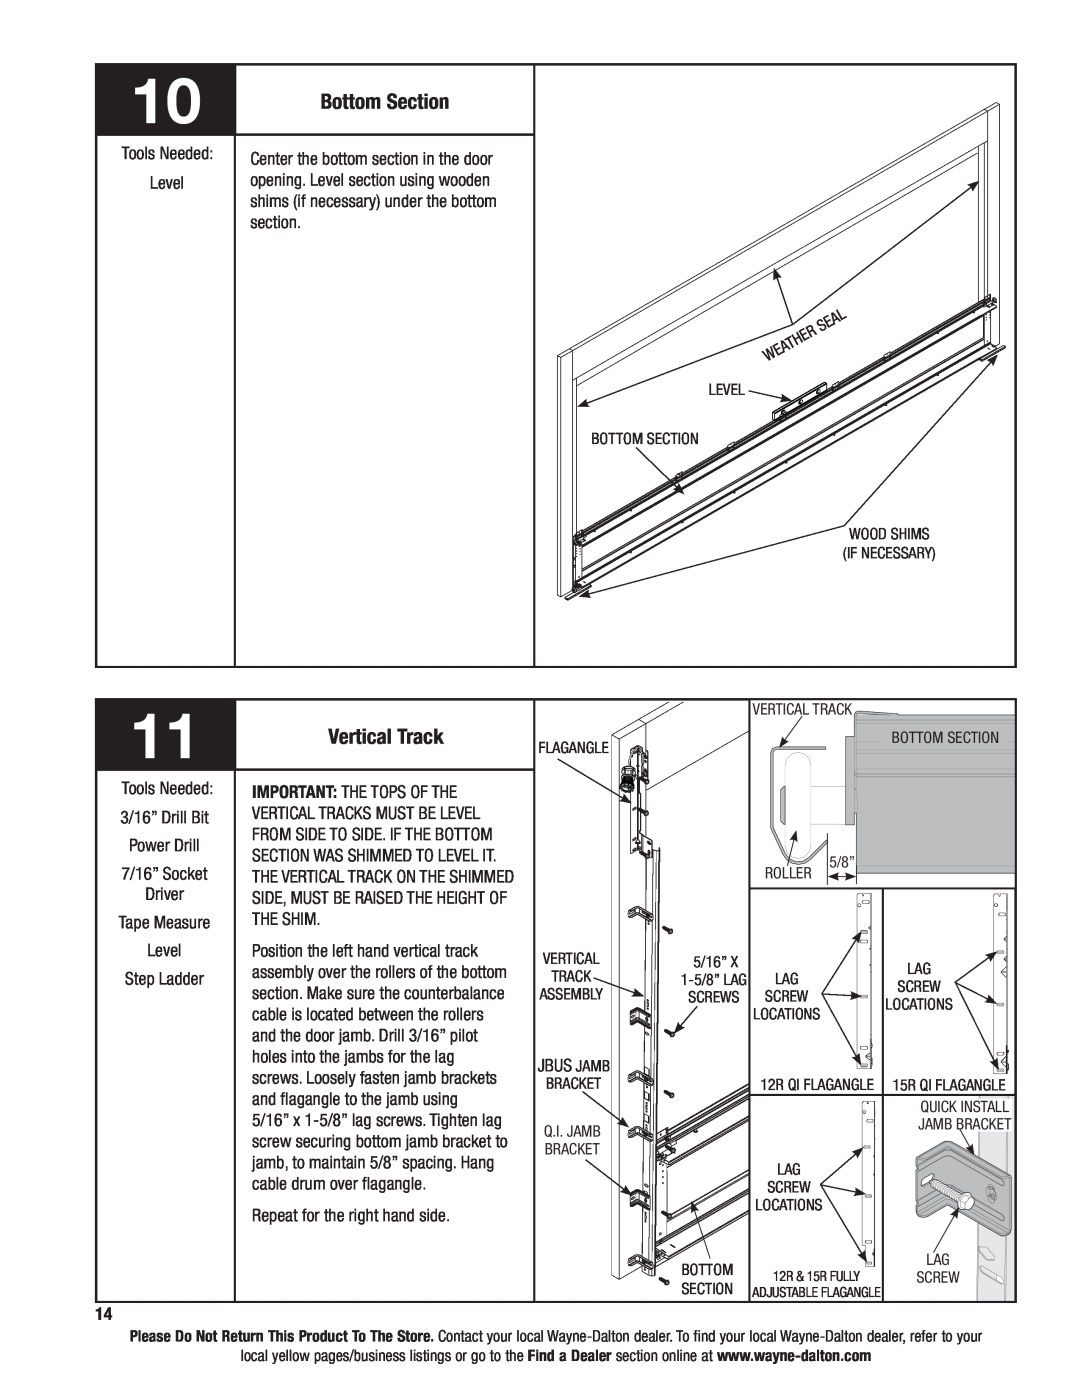 Wayne-Dalton 6100 installation instructions Bottom Section, Vertical Track 